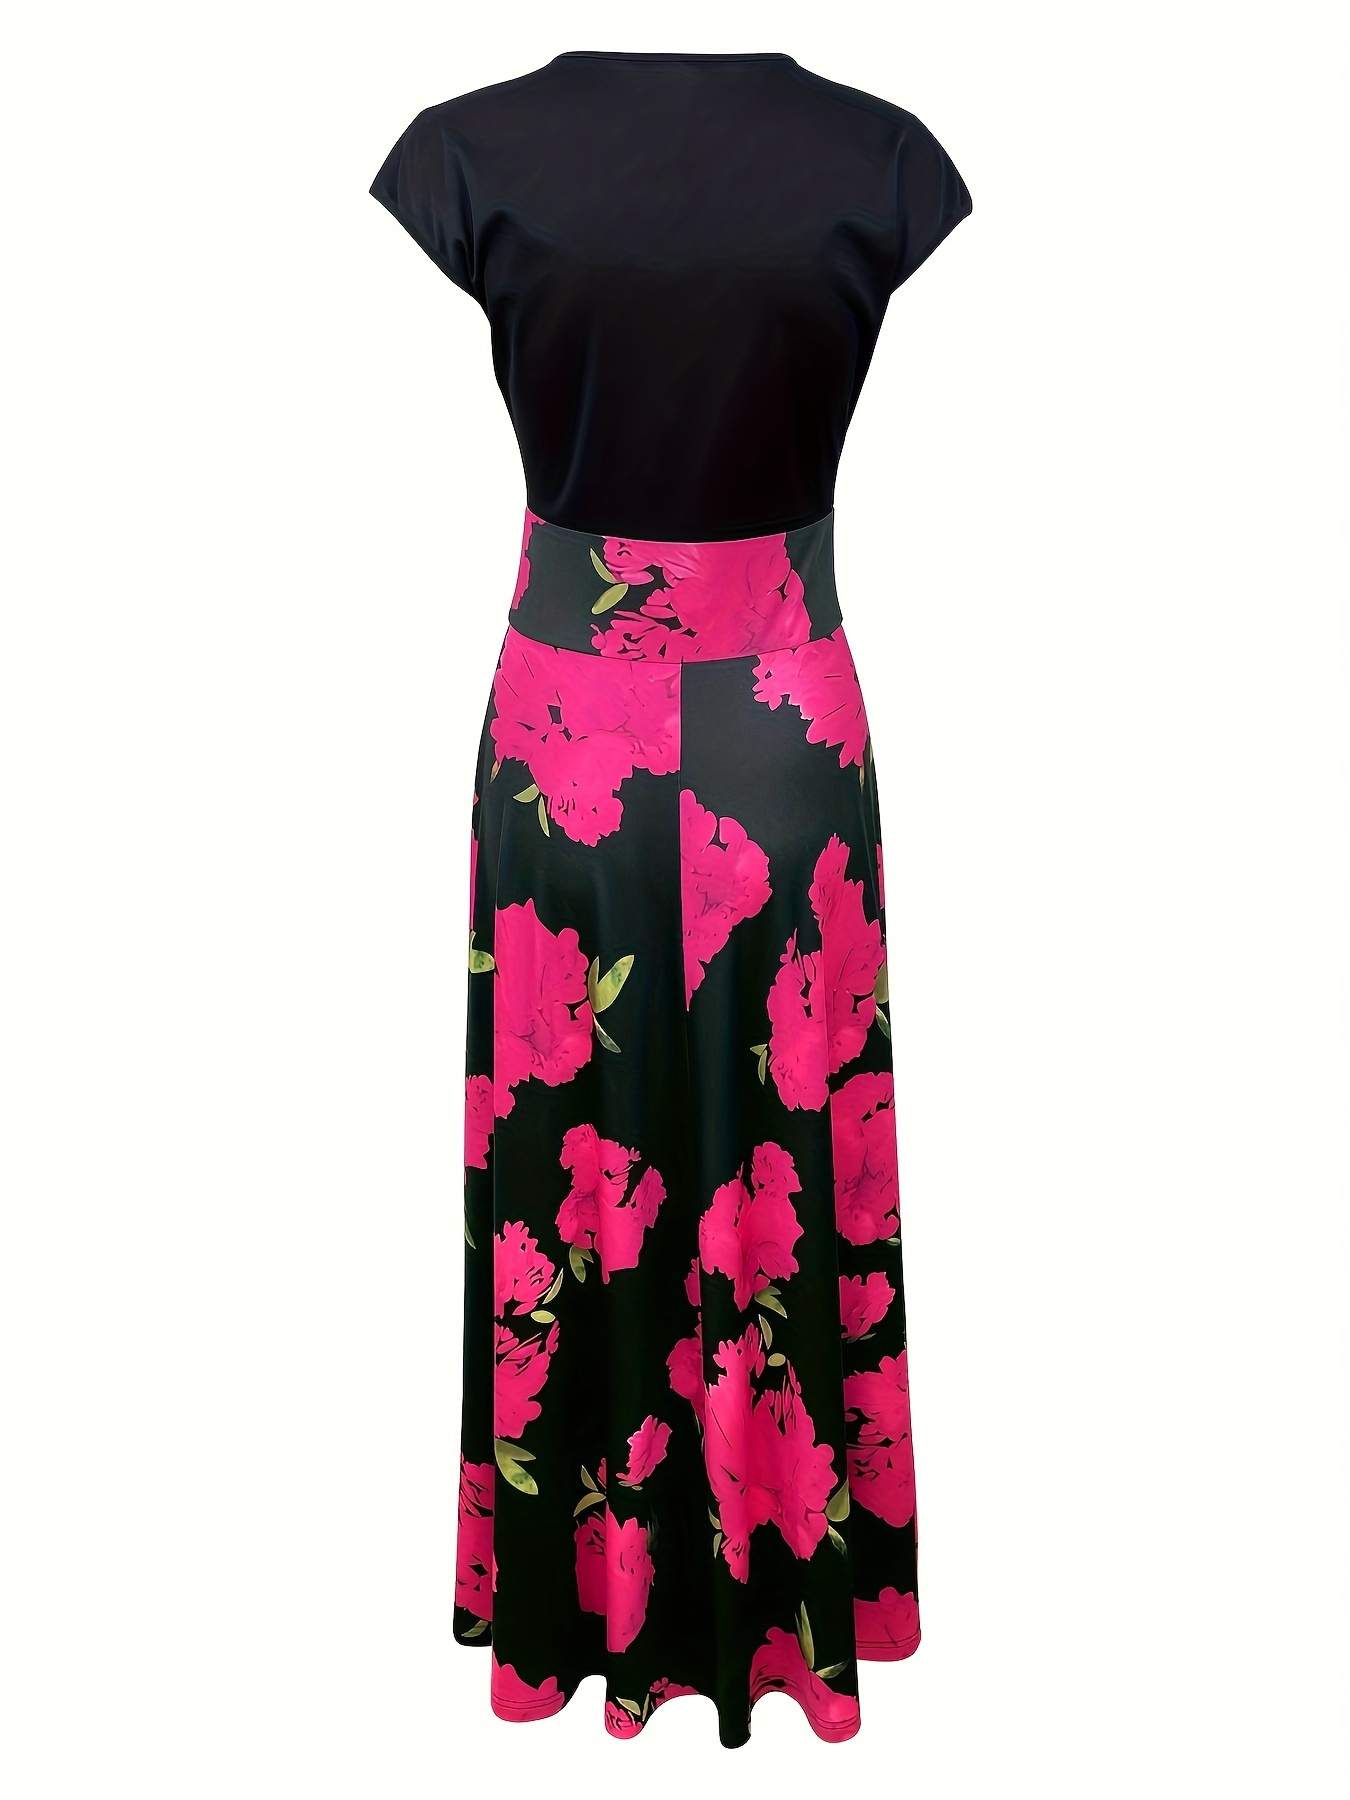 floral print crew neck dress elegant short sleeve maxi dress womens clothing